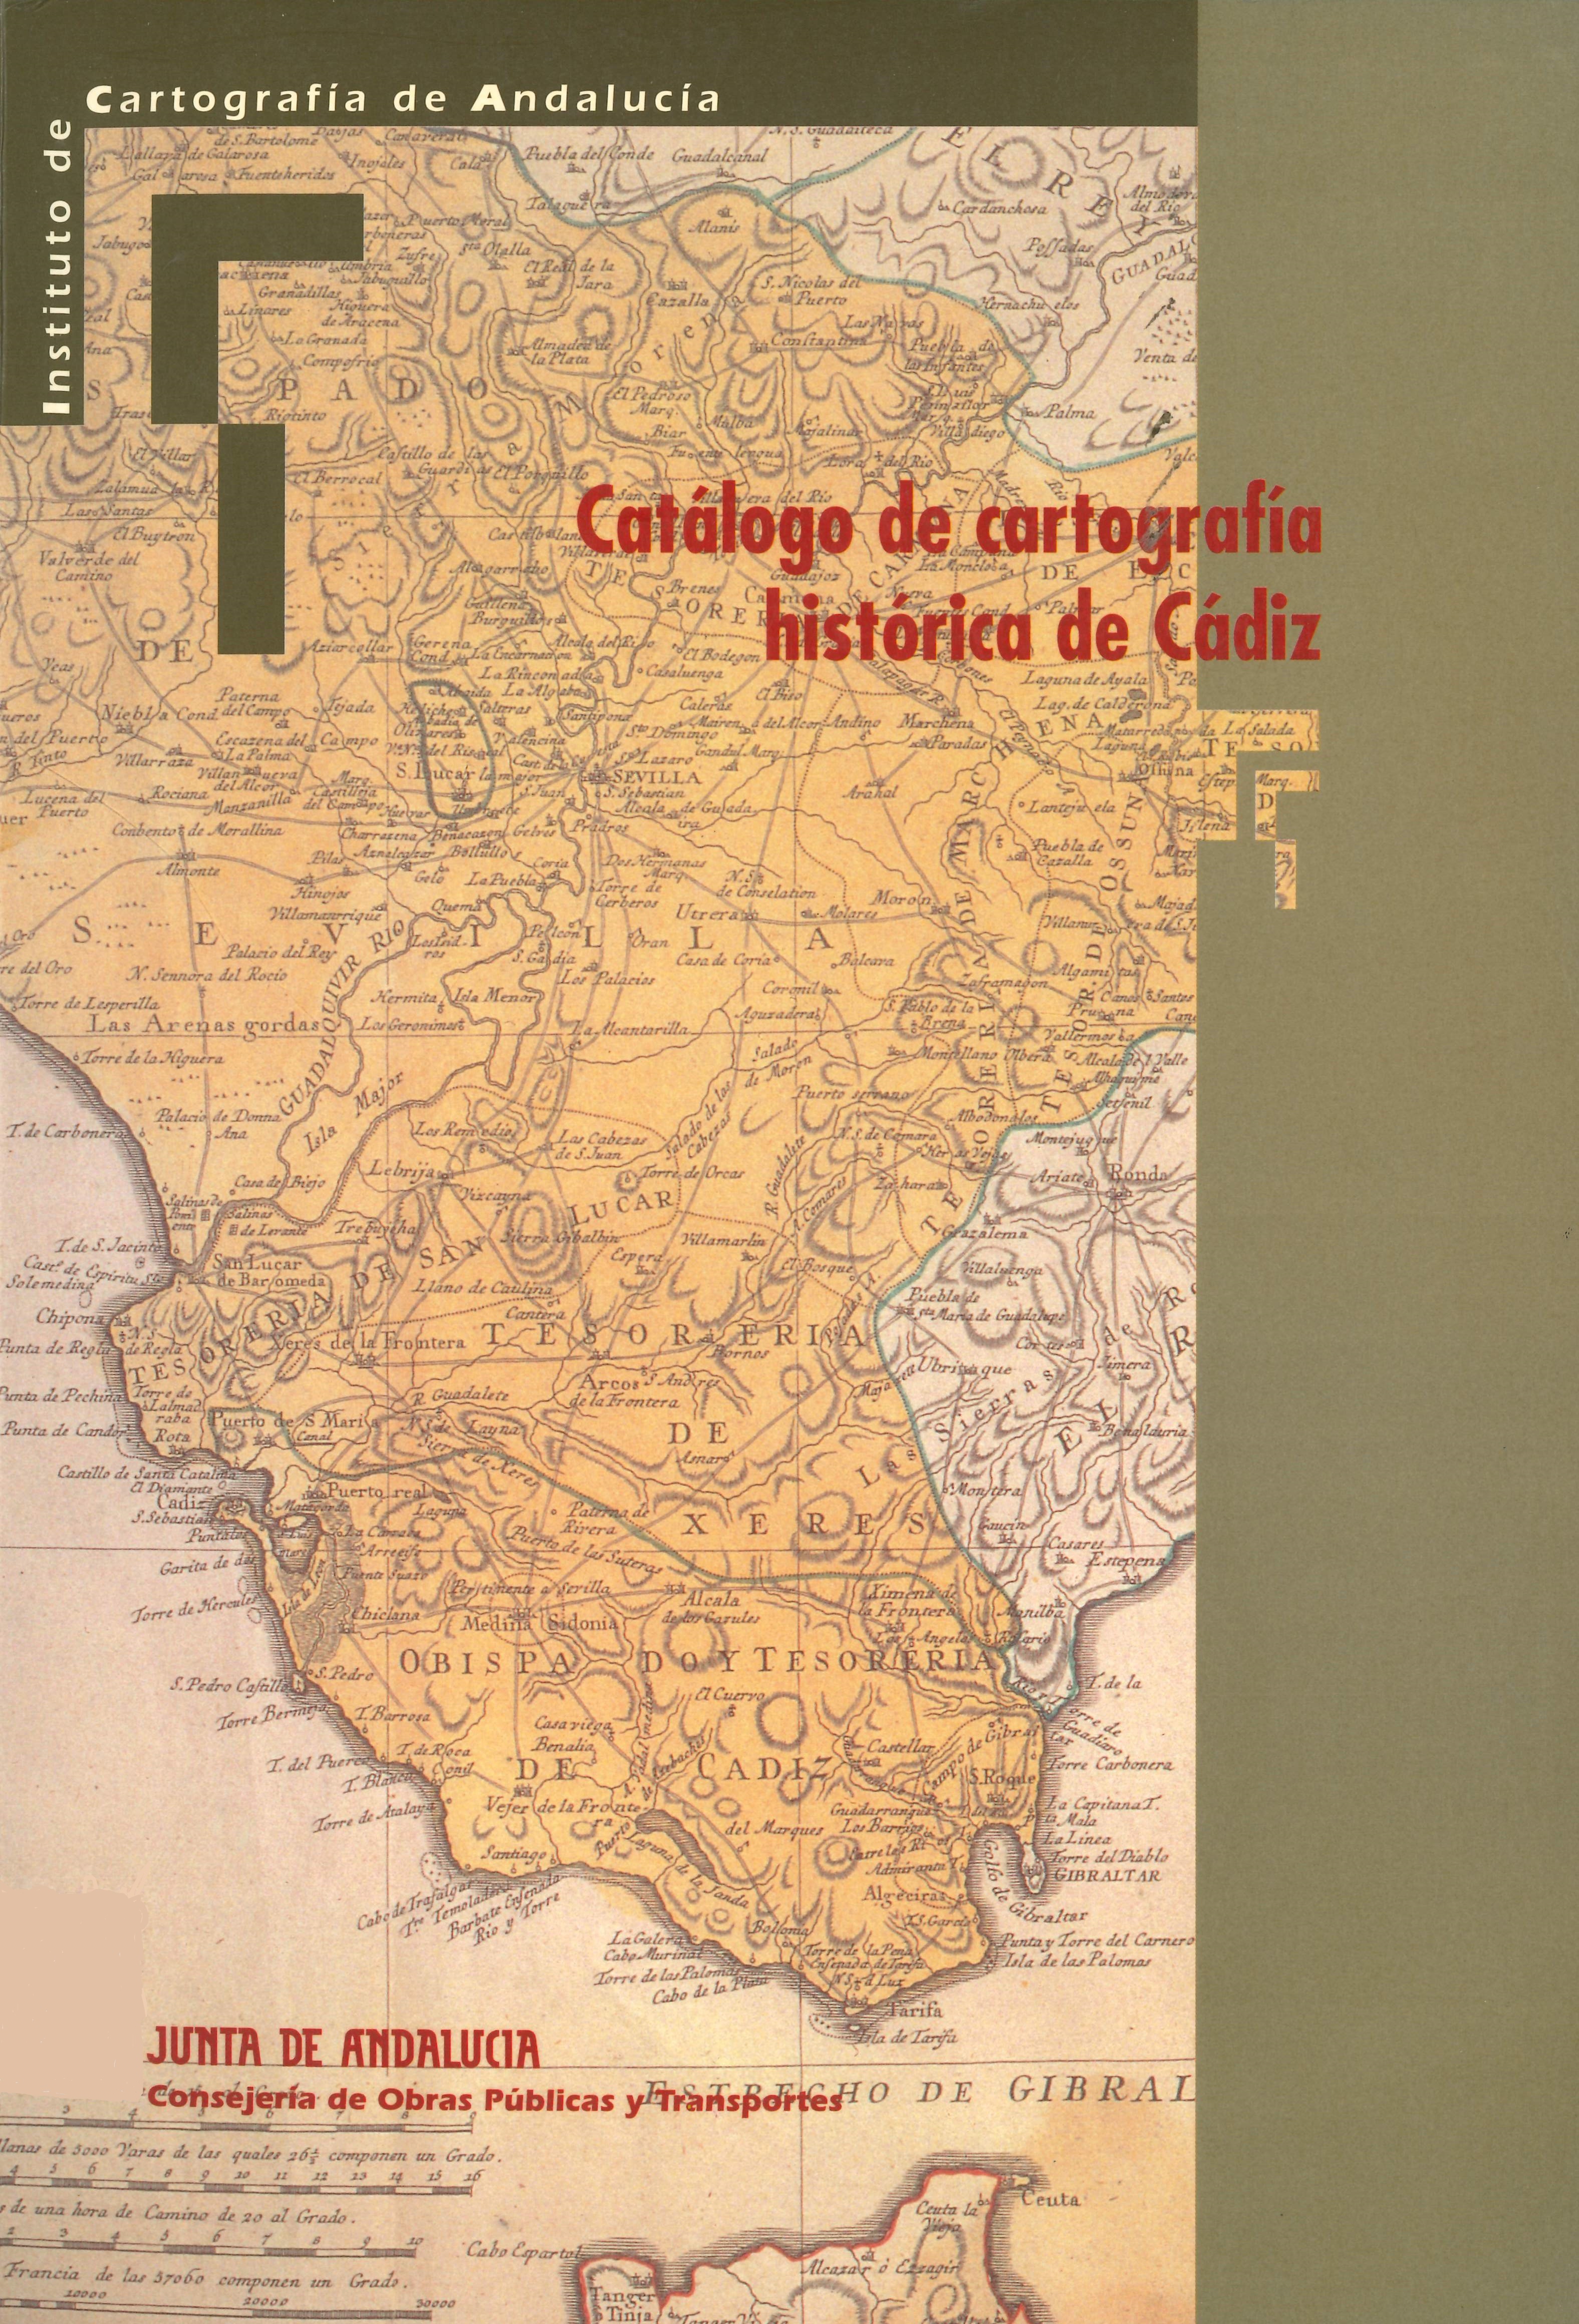 Imagen representativa de la publicación Catálogo de cartografía histórica de Cádiz